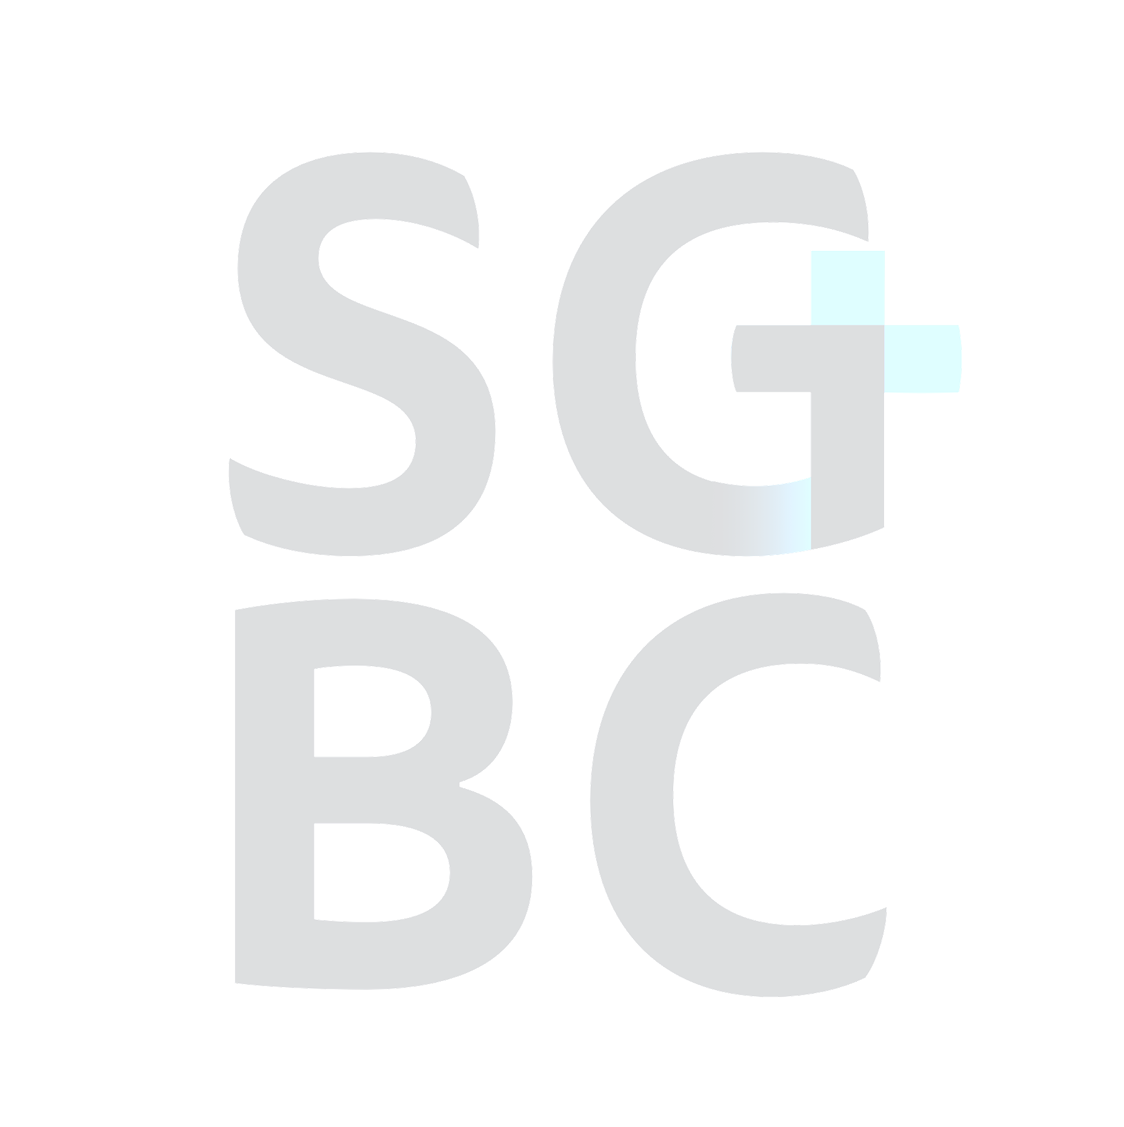 SGBC